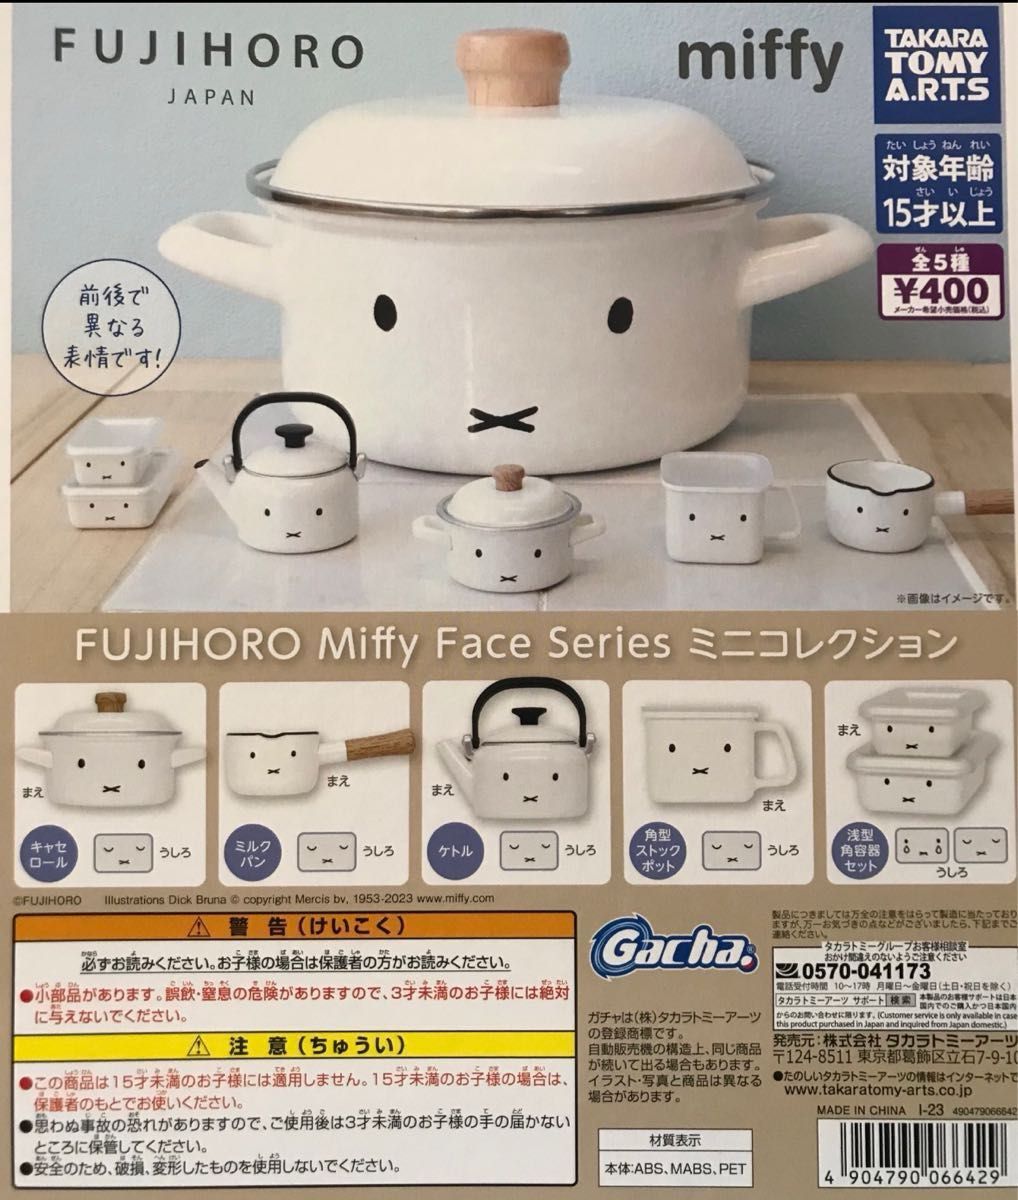 FUJIHORO Miffy Face Series ミニコレクション 角型ストックポット ミッフィー 富士ホーロー  ガチャ